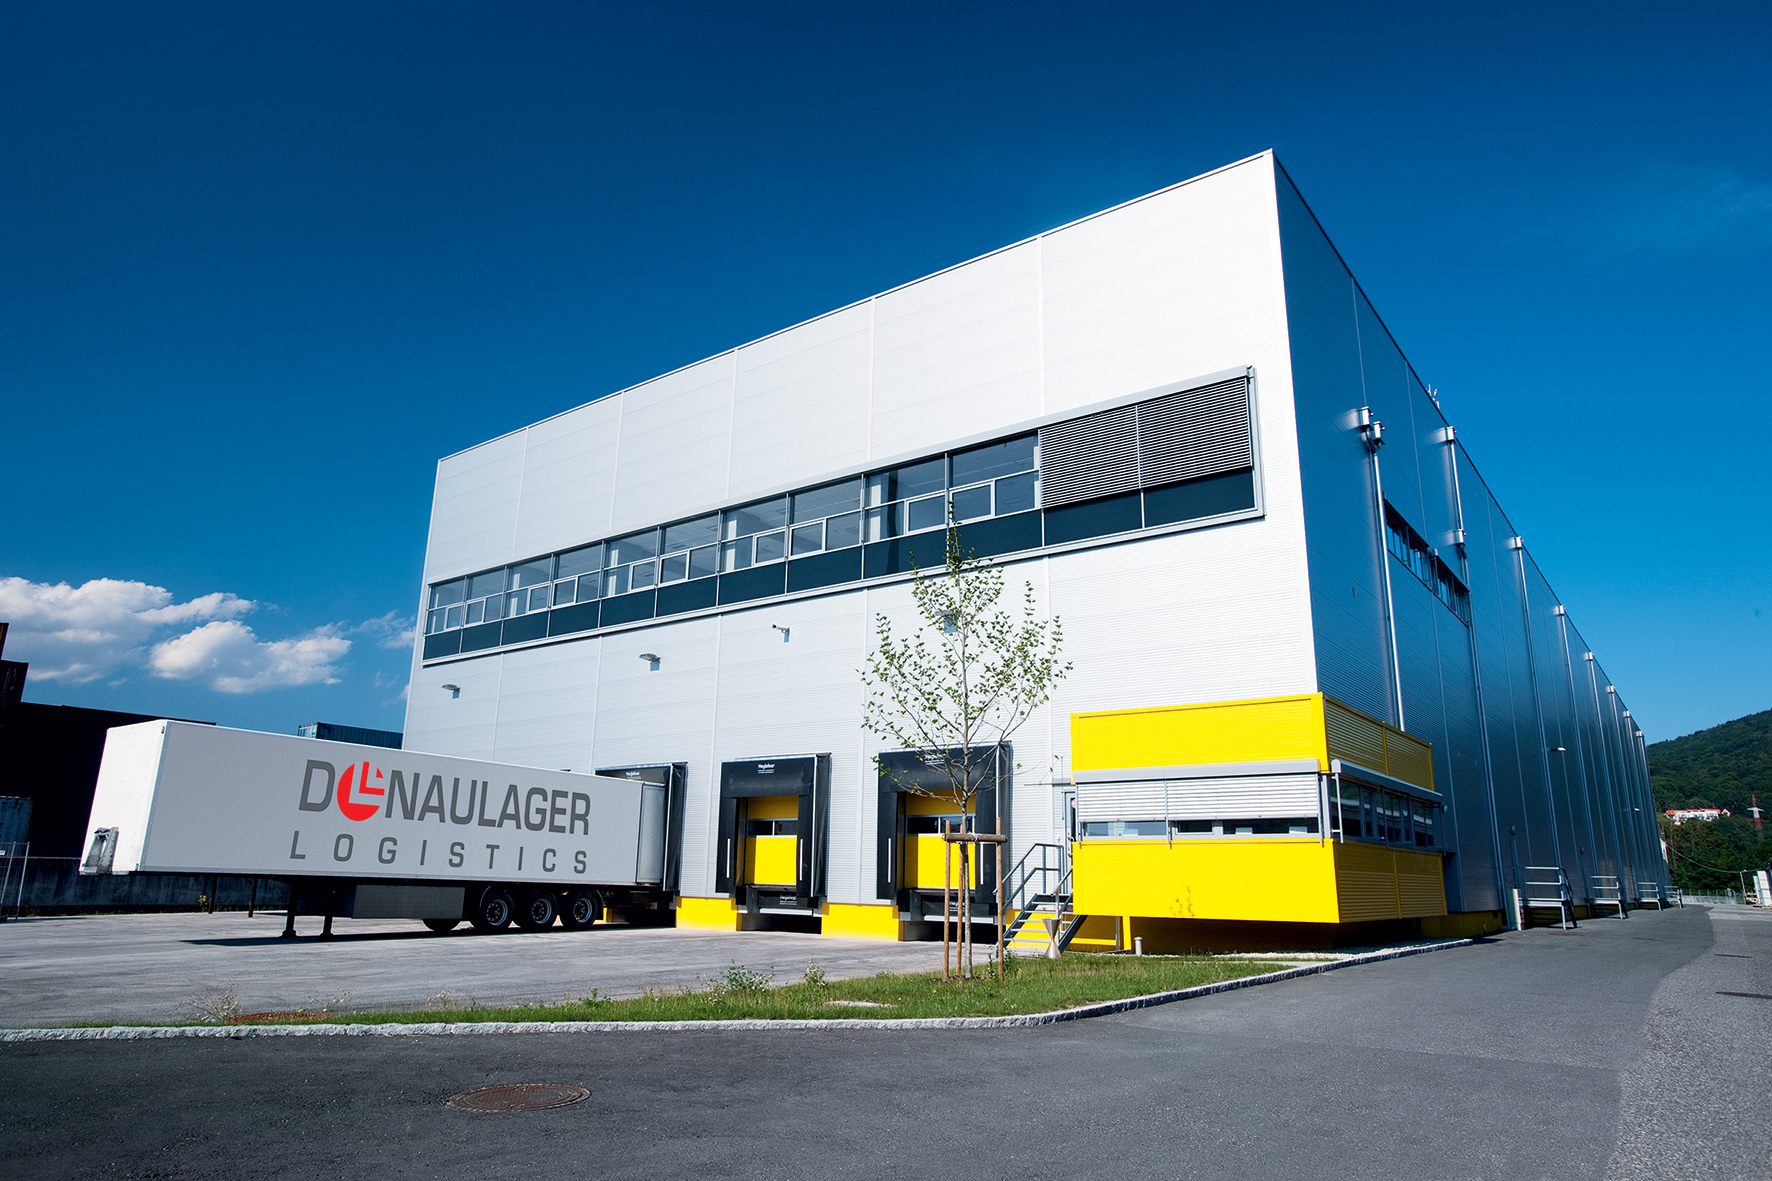 Donaulager Logistics expands its logistics competence